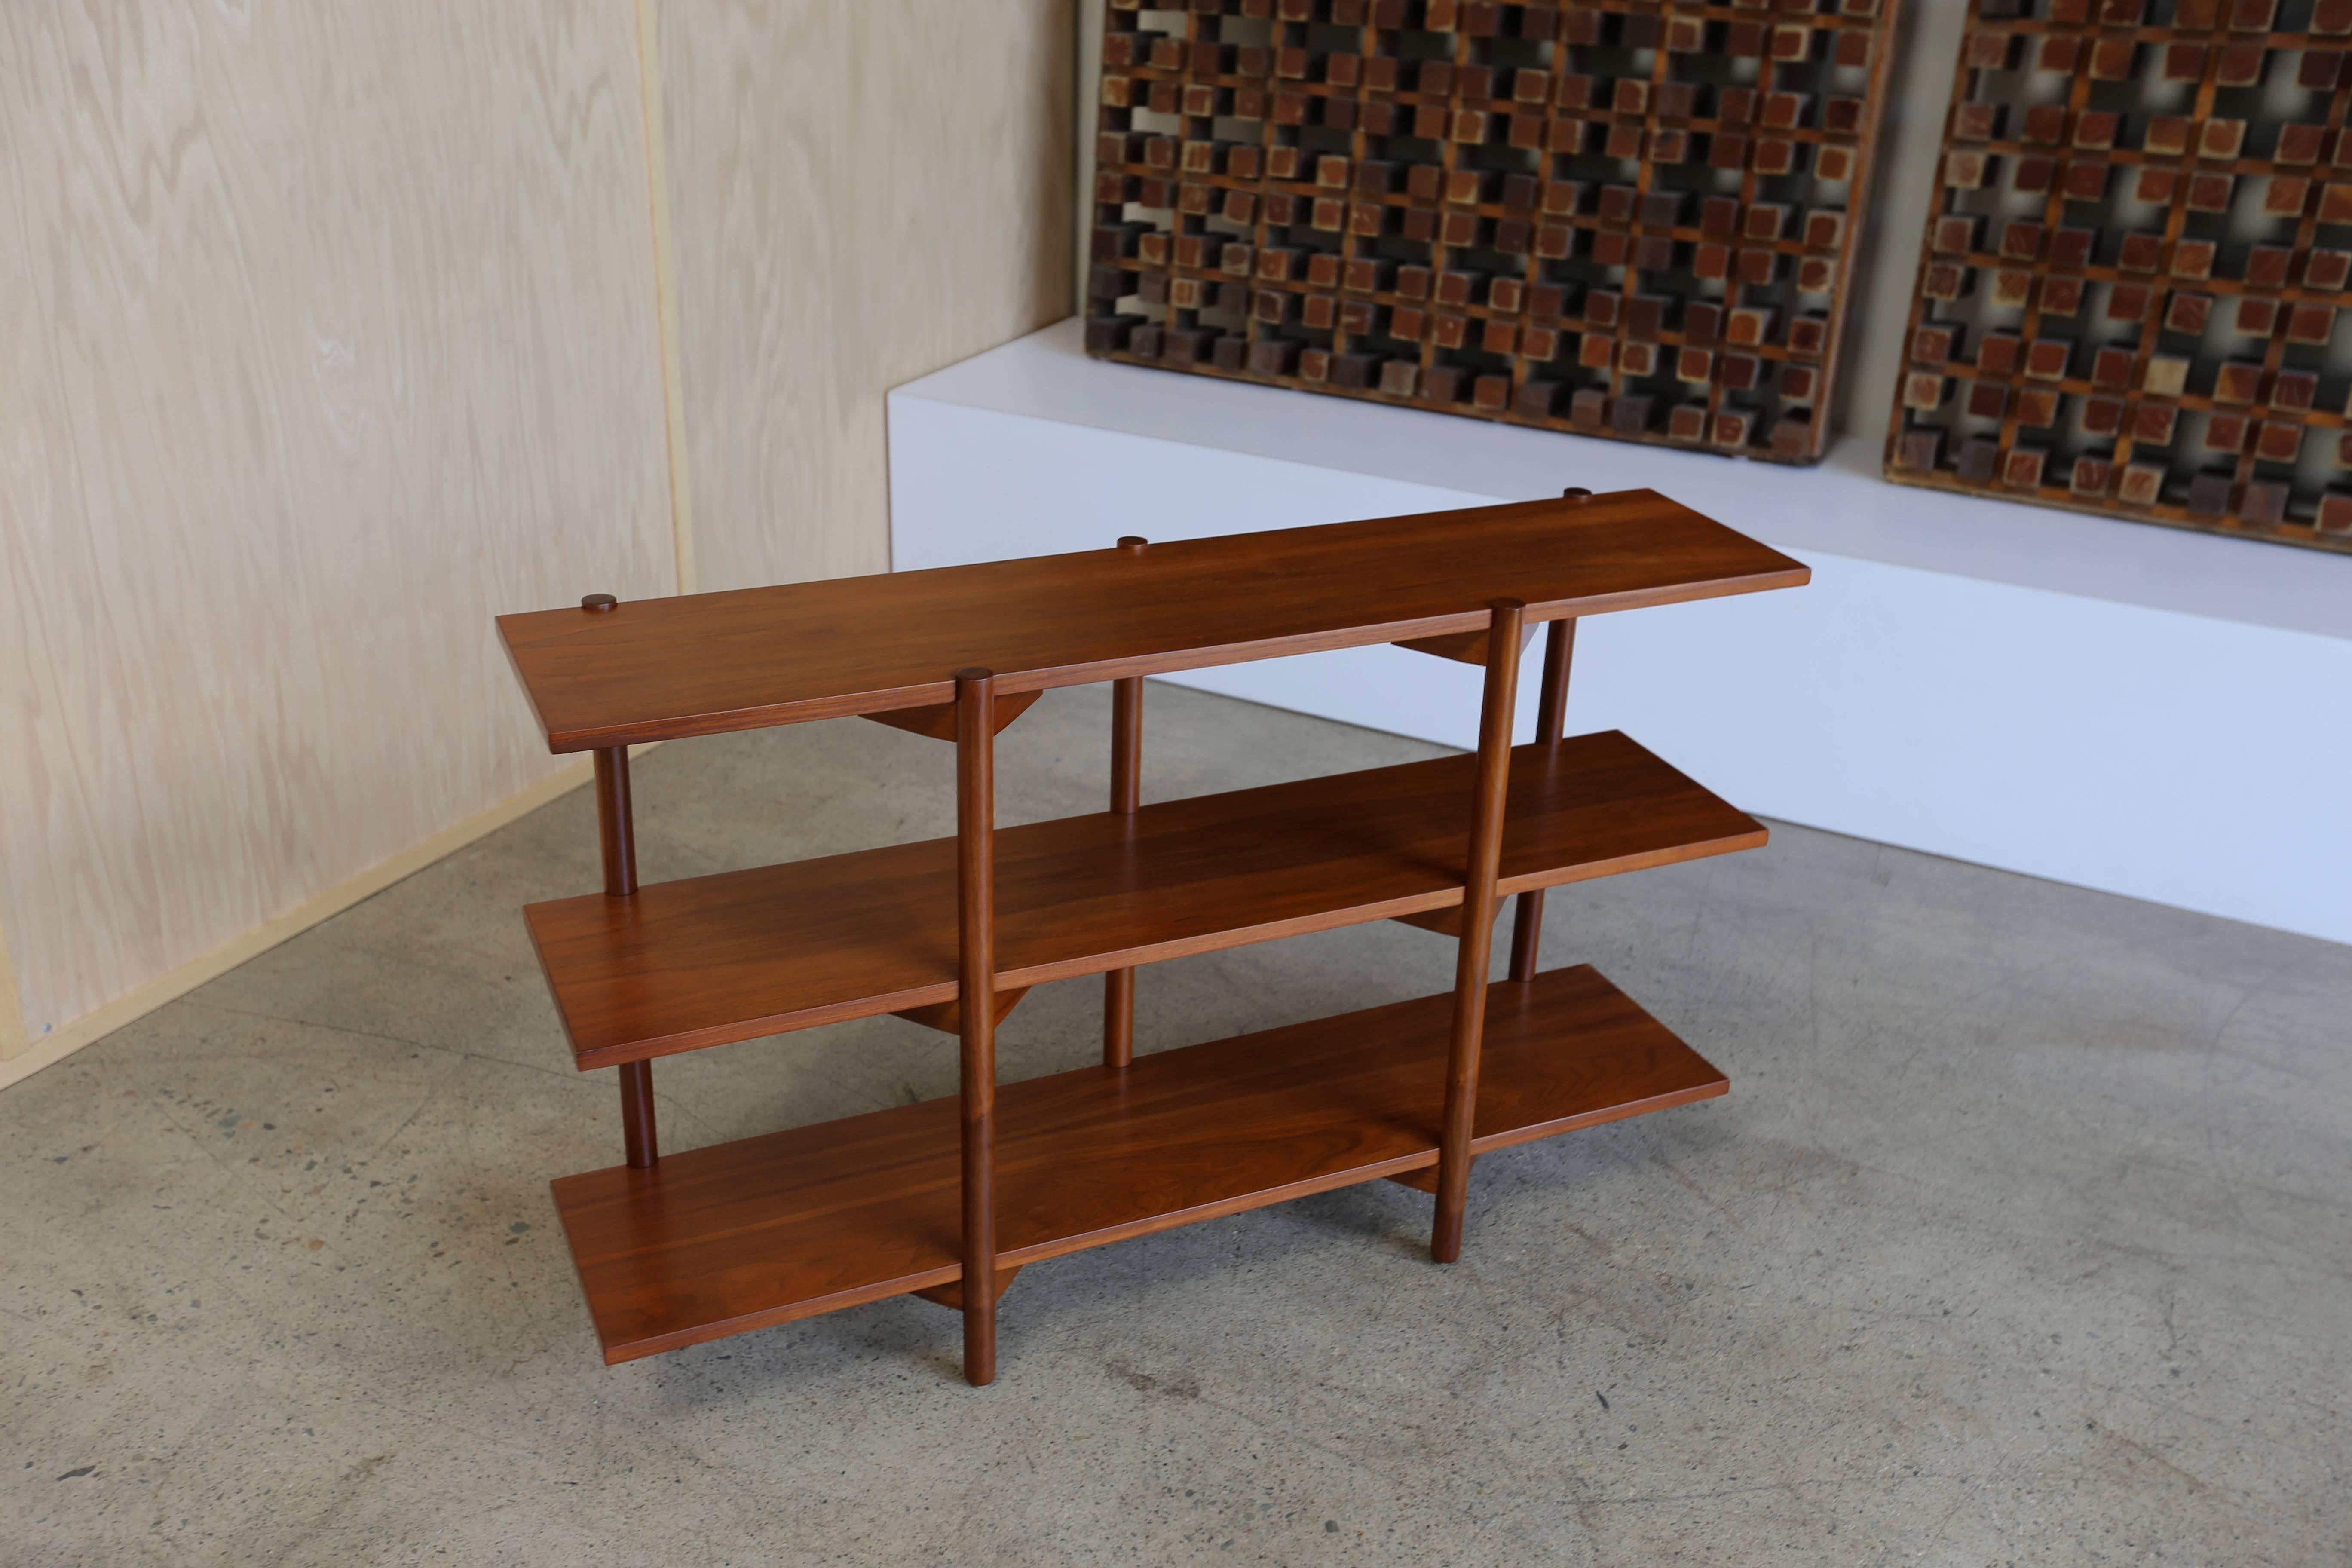 Walnut bookcase or bookshelf by Milo Baughman for Glenn of California. California design.